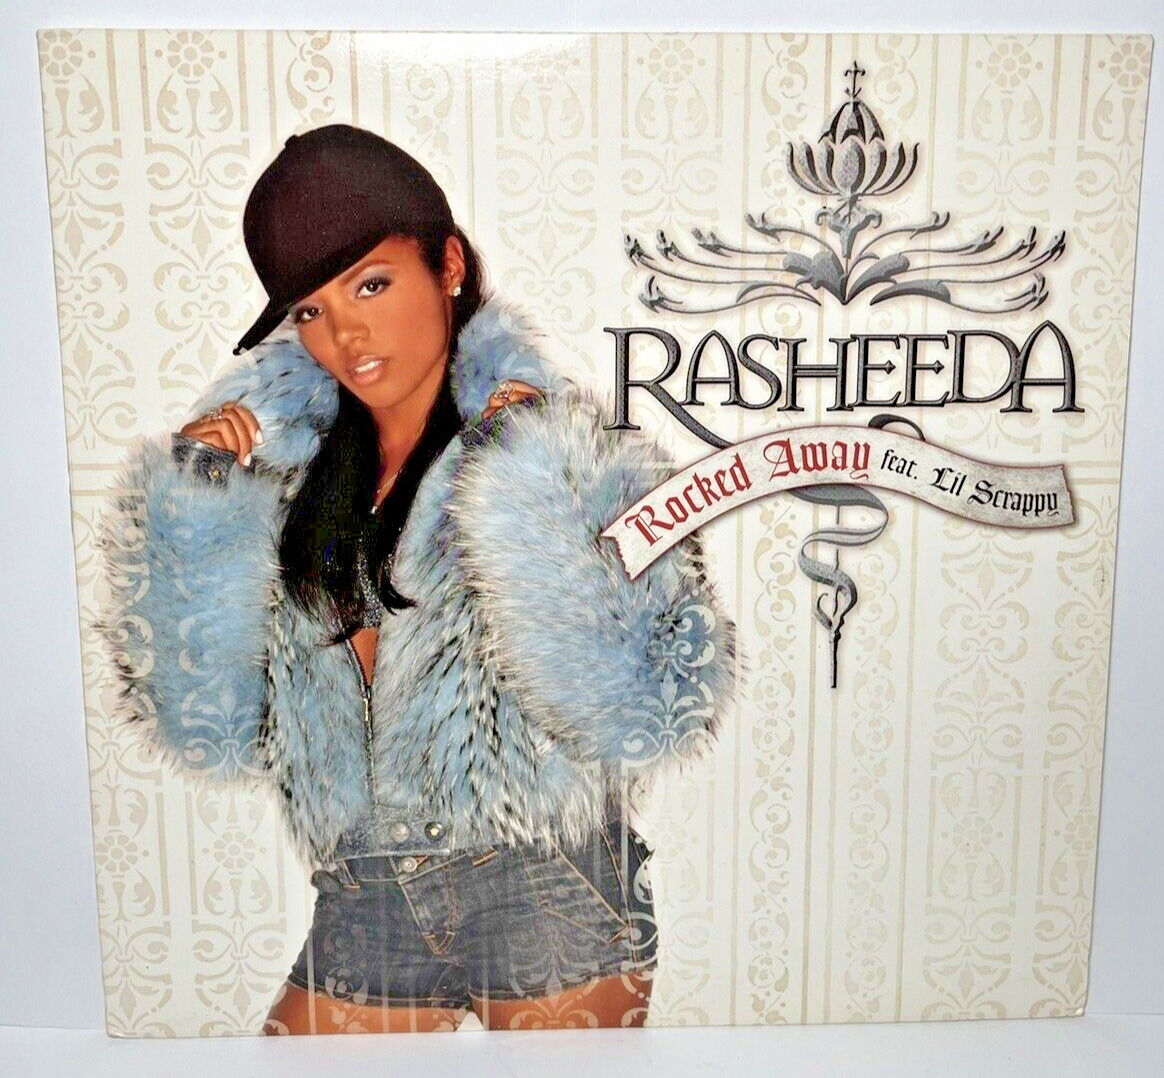 RASHEEDA / LIL' SCRAPPY "ROCKED AWAY" 2005 VINYL 12" PROMO SINGLE RECORD